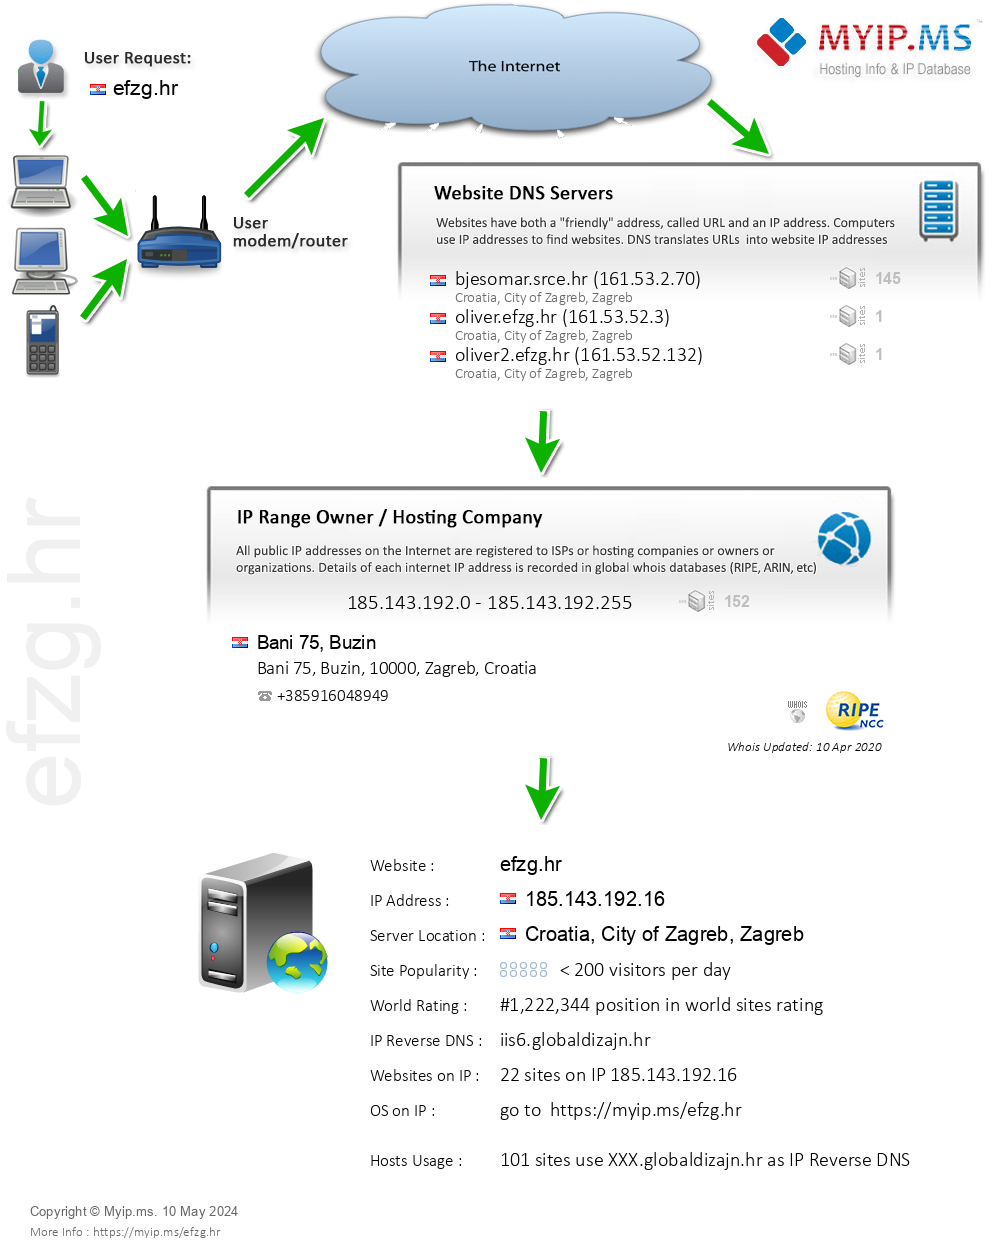 Efzg.hr - Website Hosting Visual IP Diagram